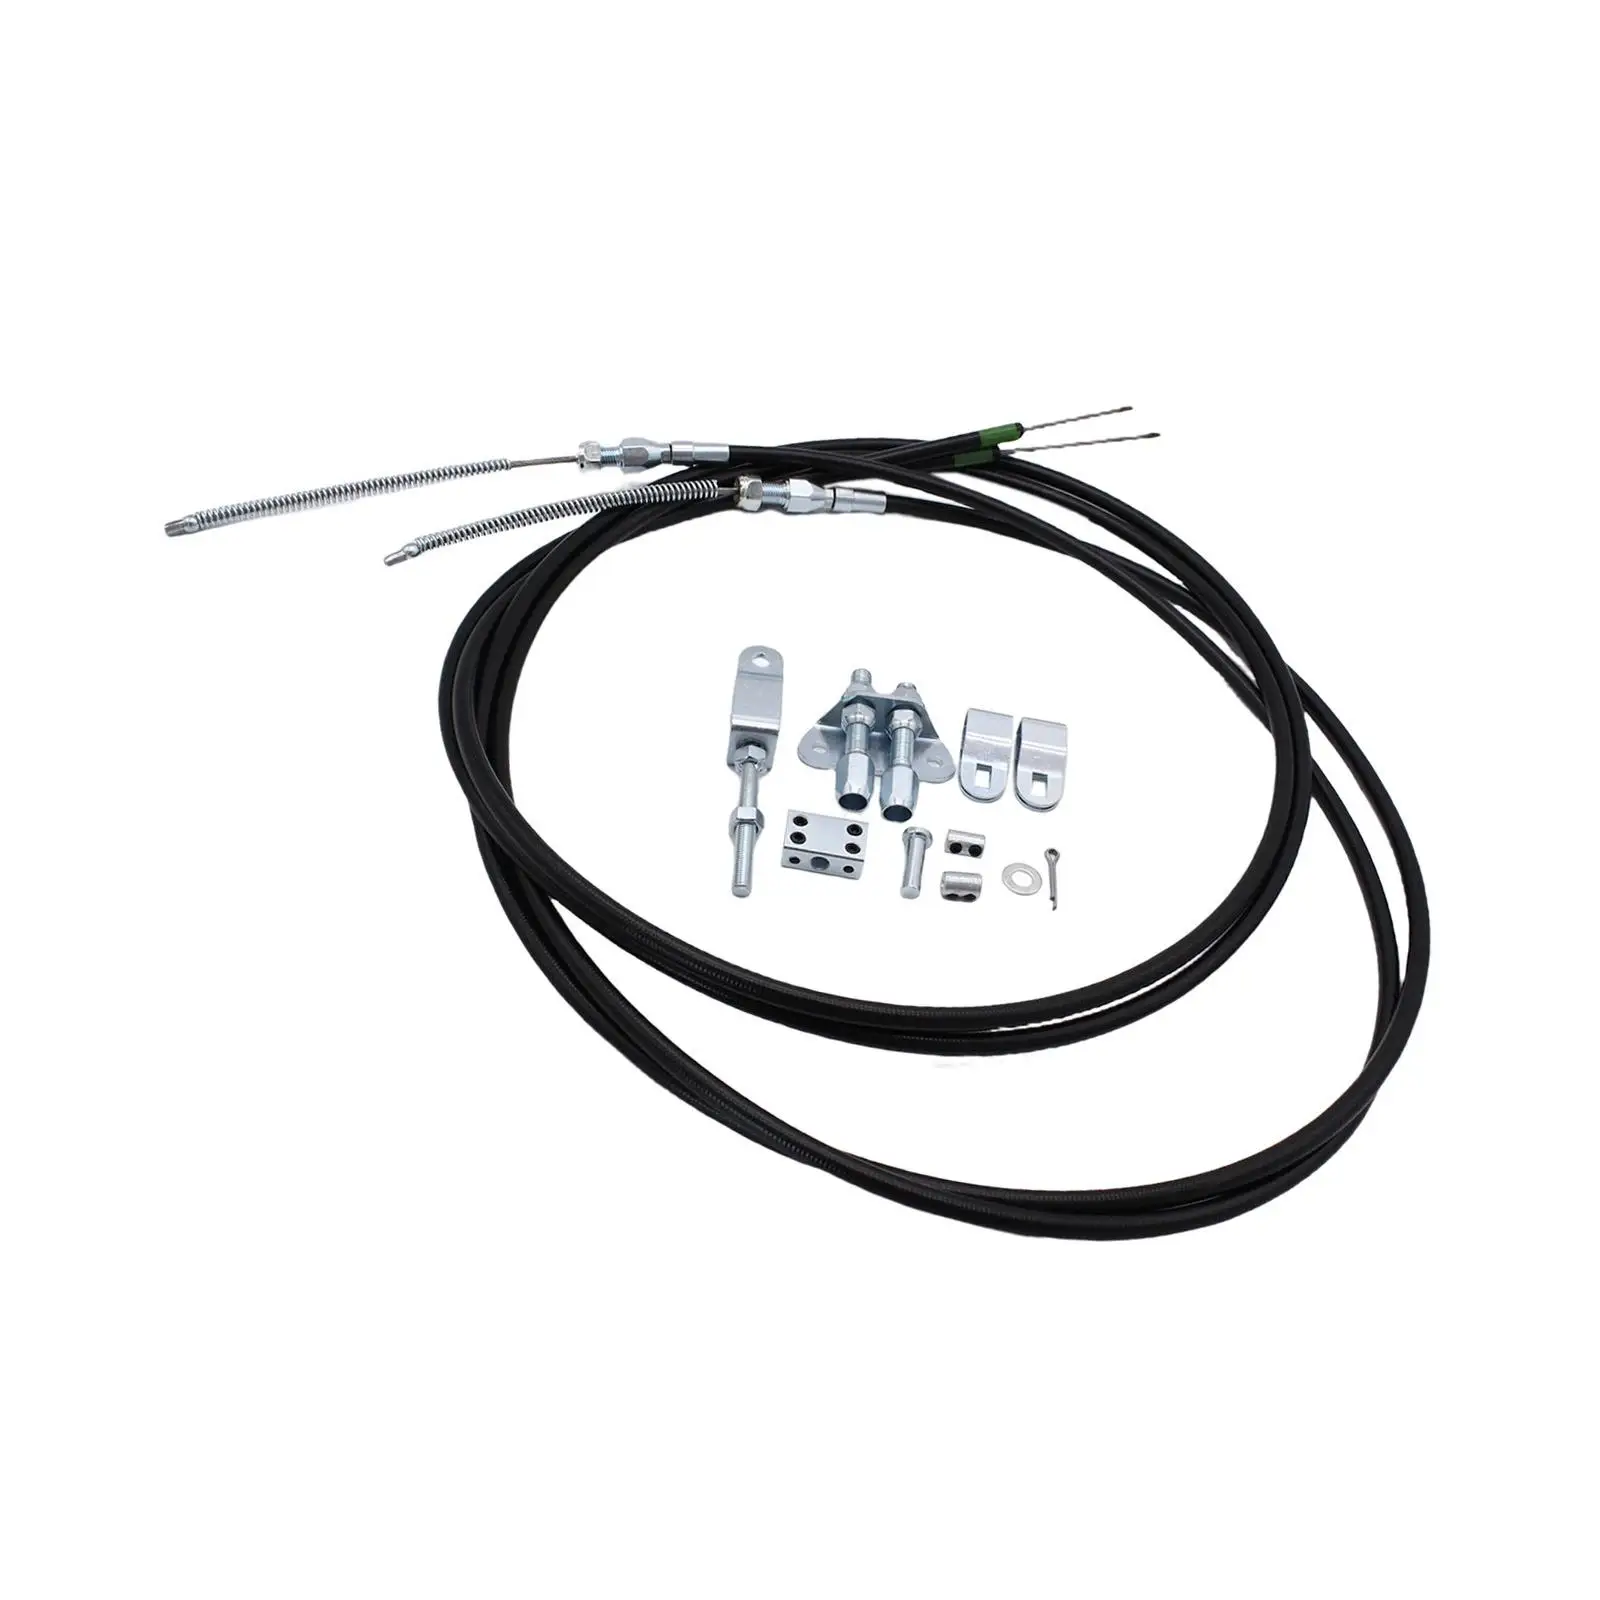 Automotive Universal Parking Brake Cable Kit 330-9371 for Internal Drum Brake Assemblies Accessories Replaces Flexible Durable